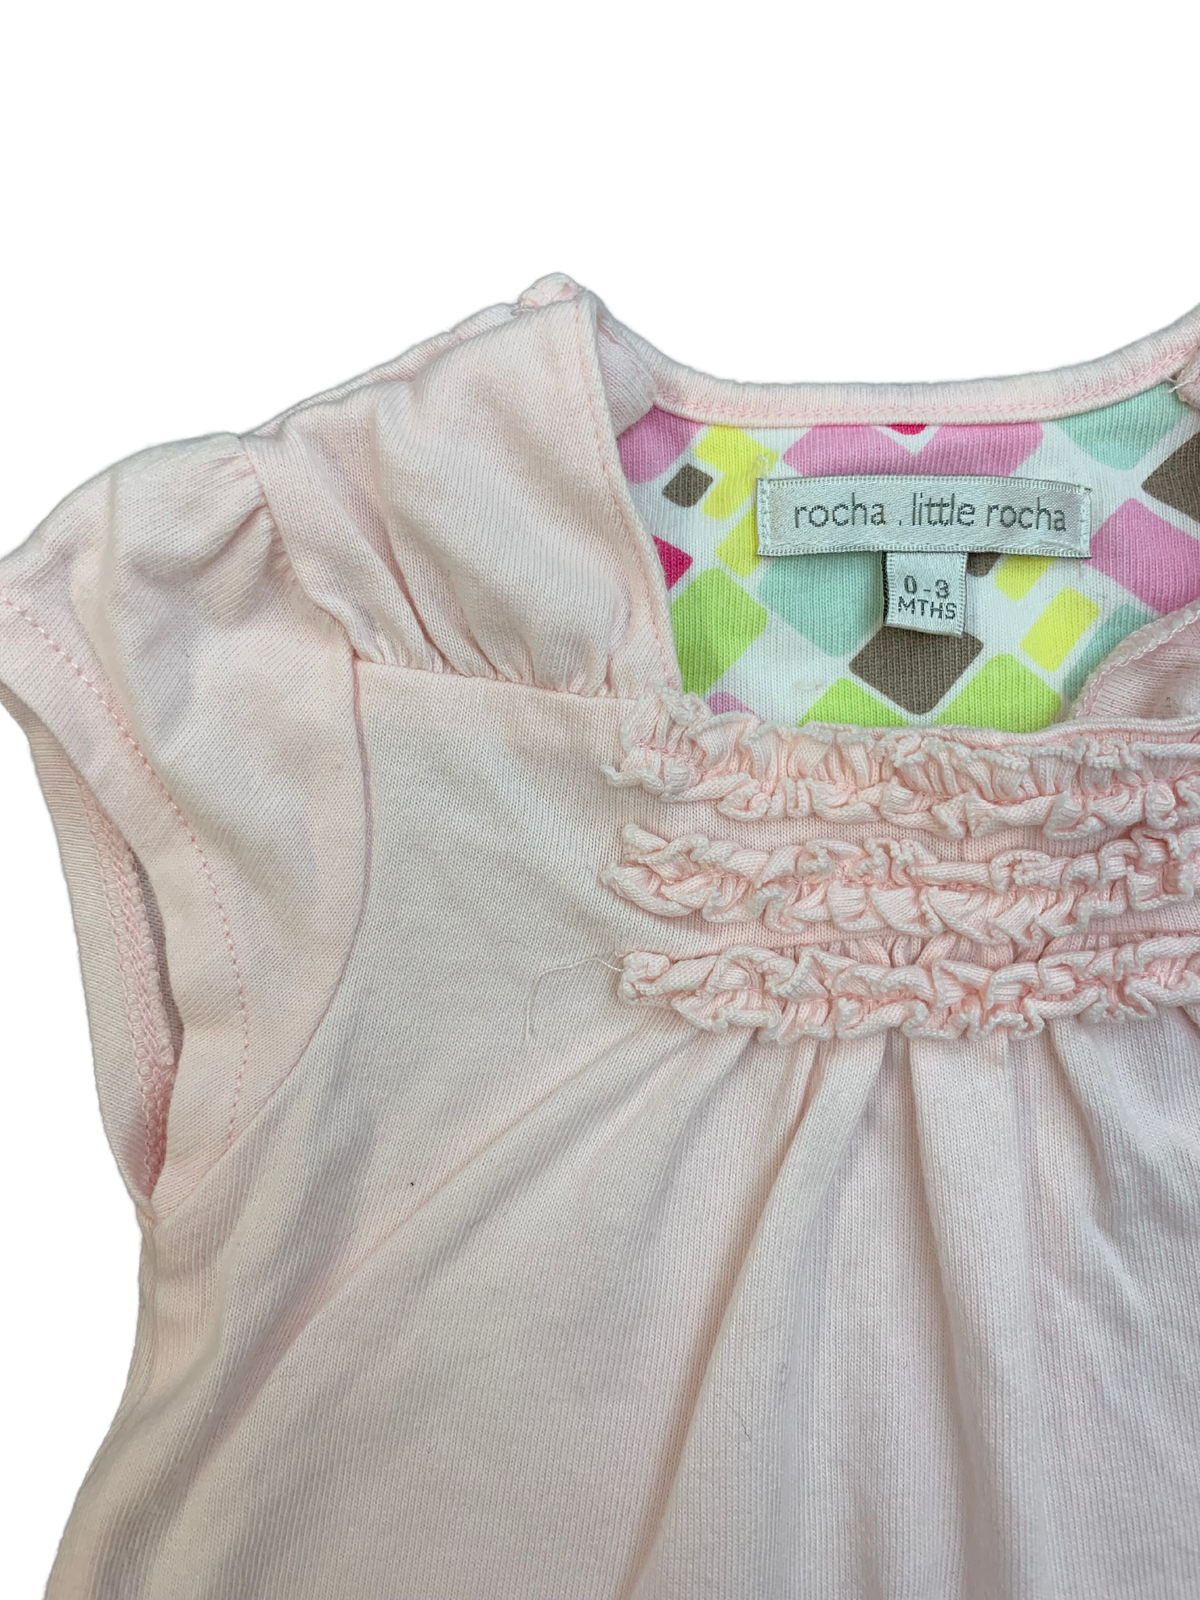 Rocher Little Rocher Embroidered Top Baby Girl 0-3 Months/12lbs